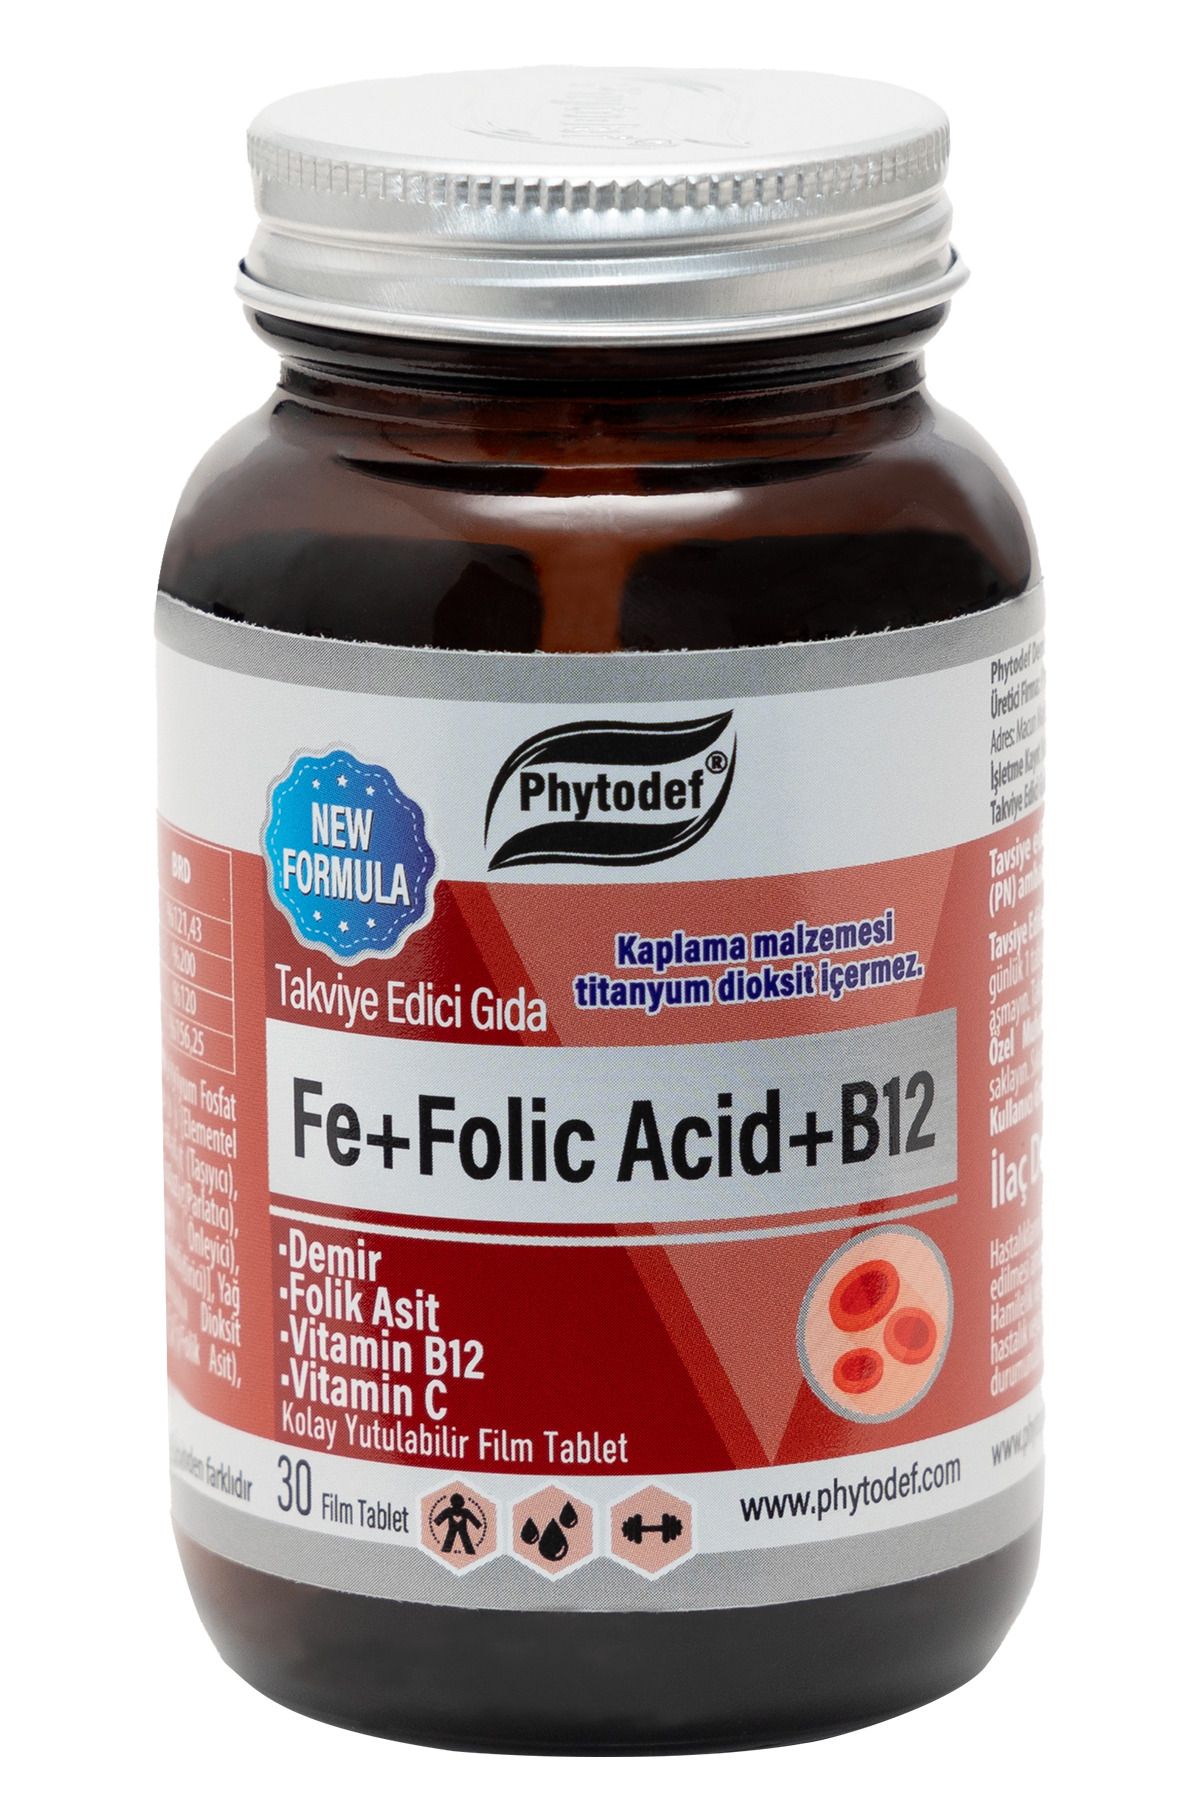 Phytodef Demir + Folik Asit + Vitamin B12 + Vitamin C - 30 Tablet